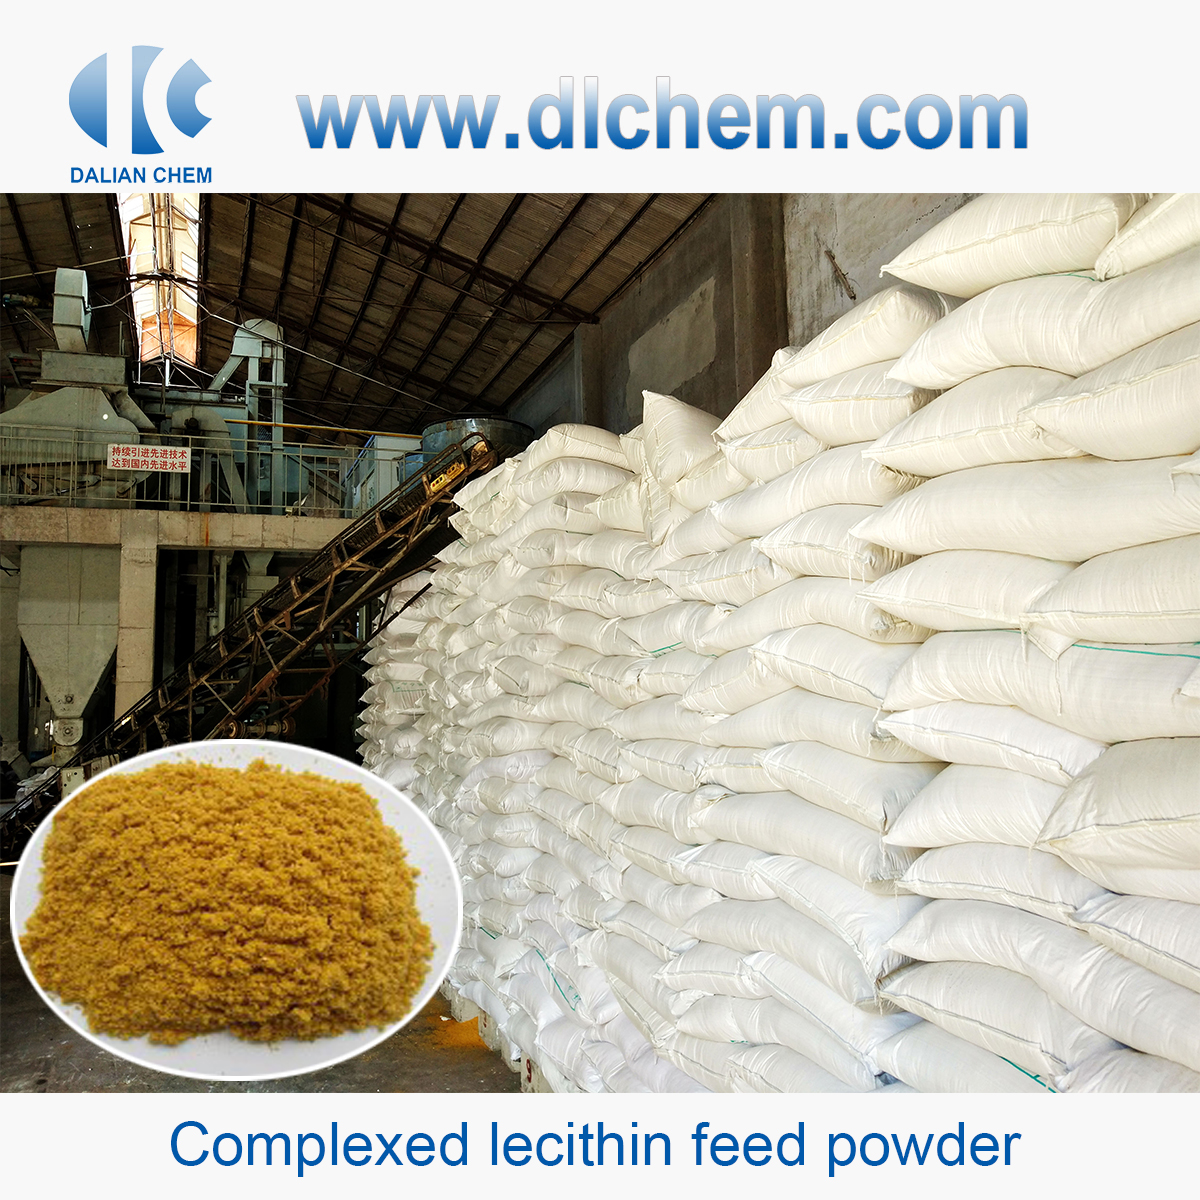 Complexed lecithin feed powder